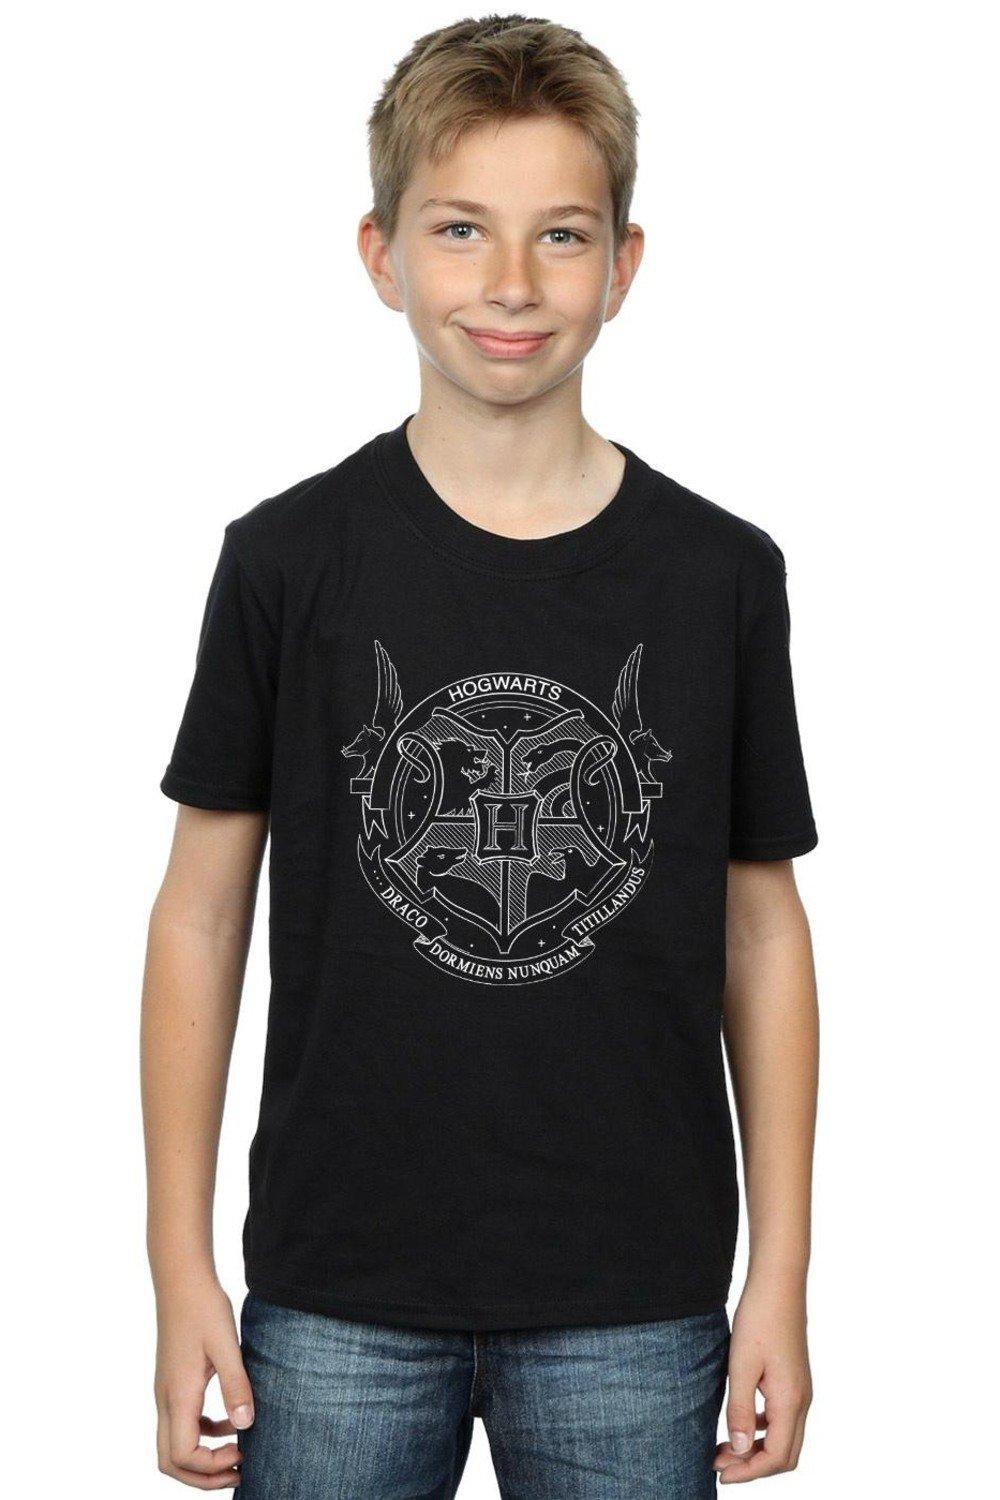 Hogwarts Seal T-Shirt